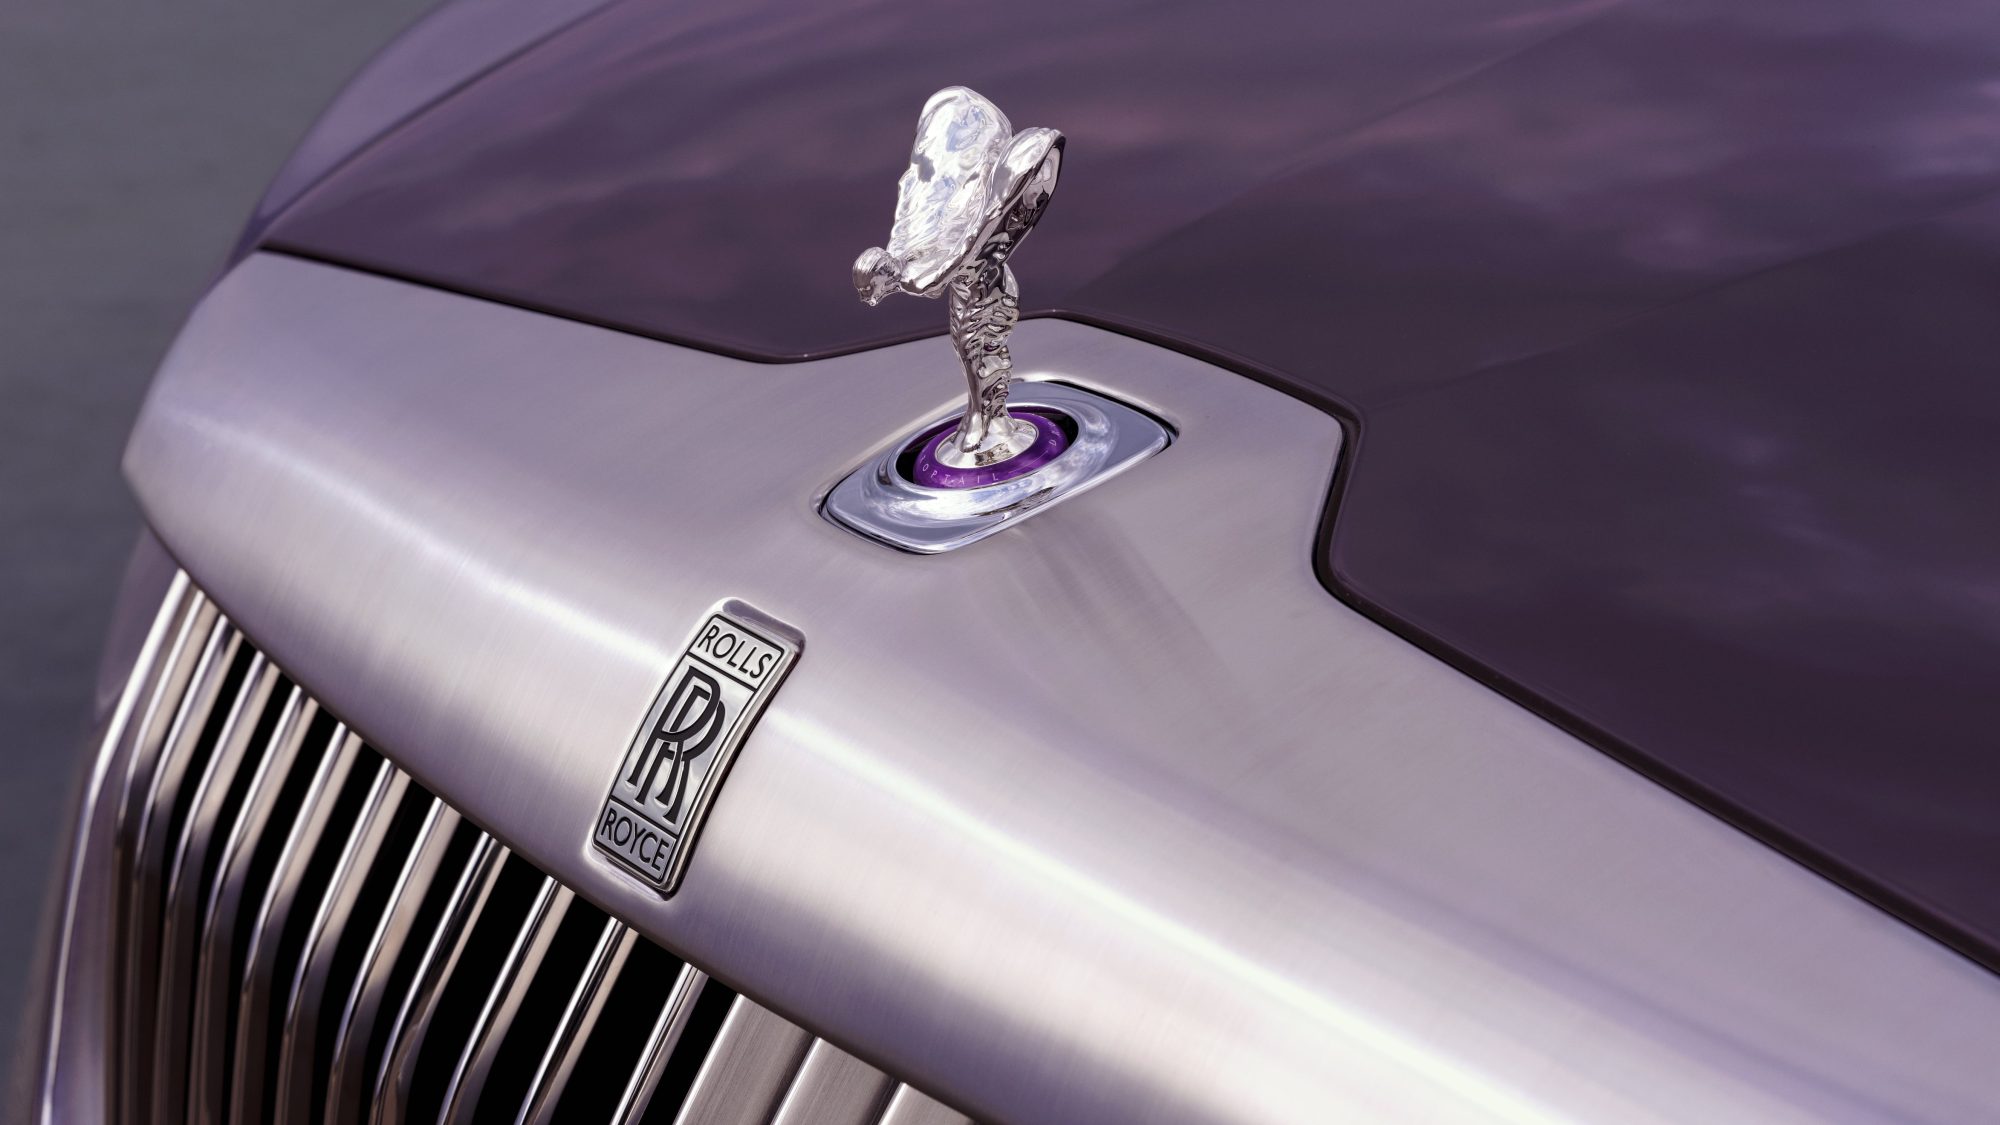 Rolls-Royce unveils the Amethyst Droptail